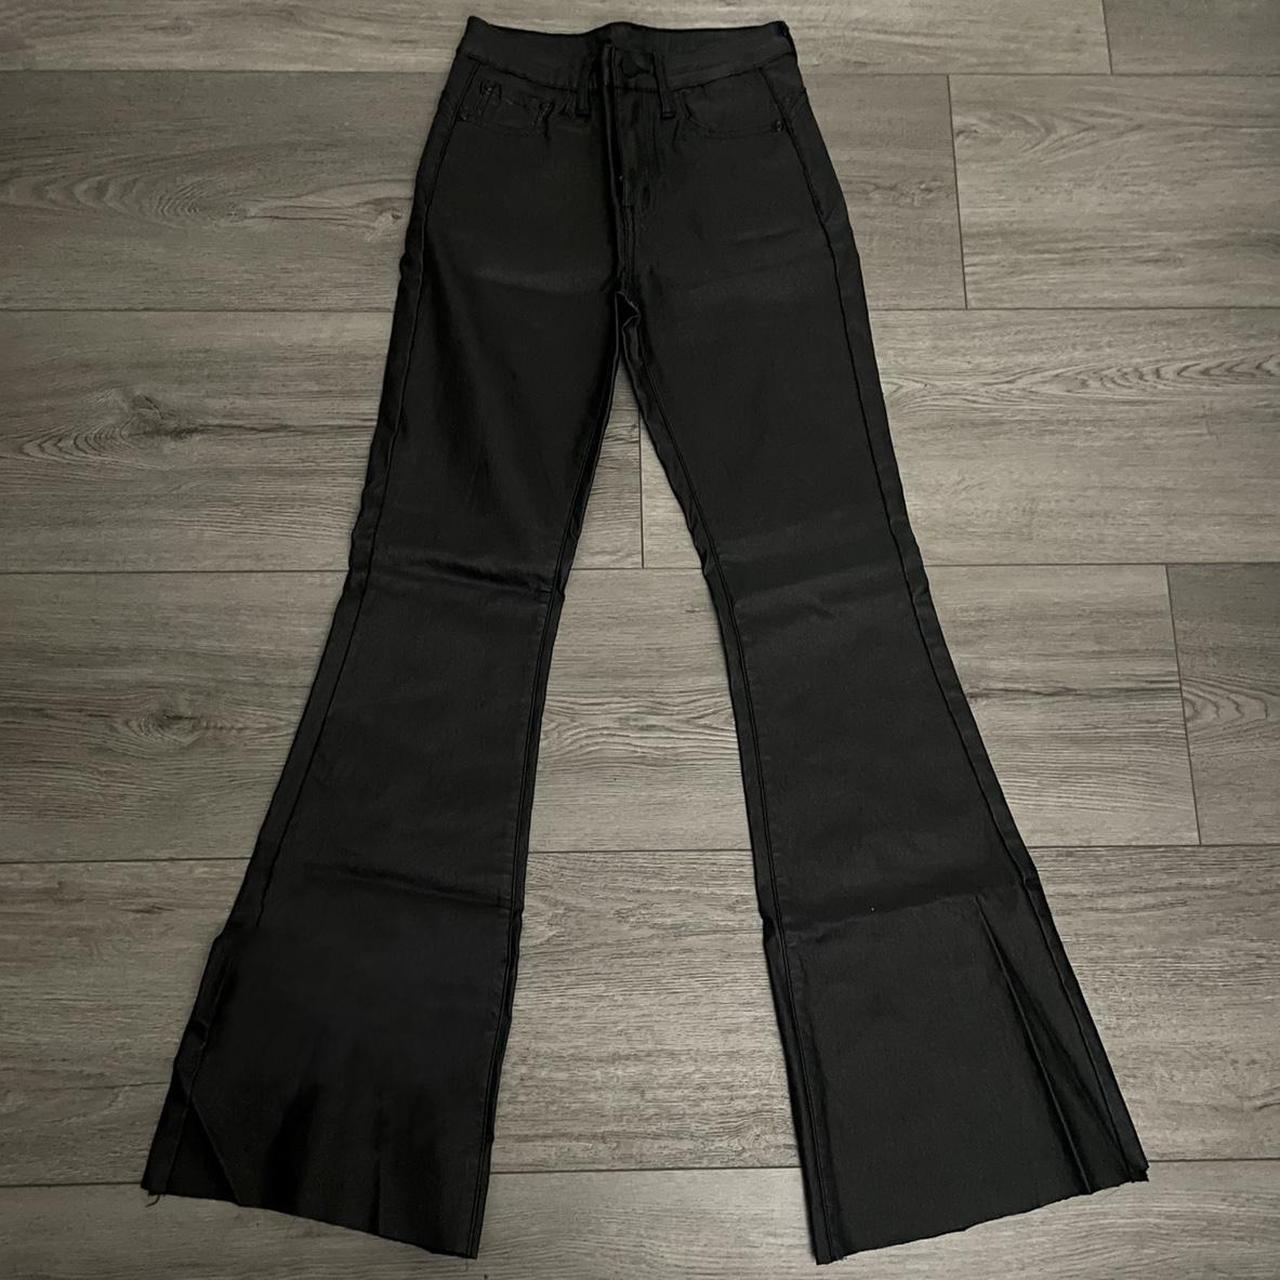 black flared leather pants -flared -never worn ... - Depop